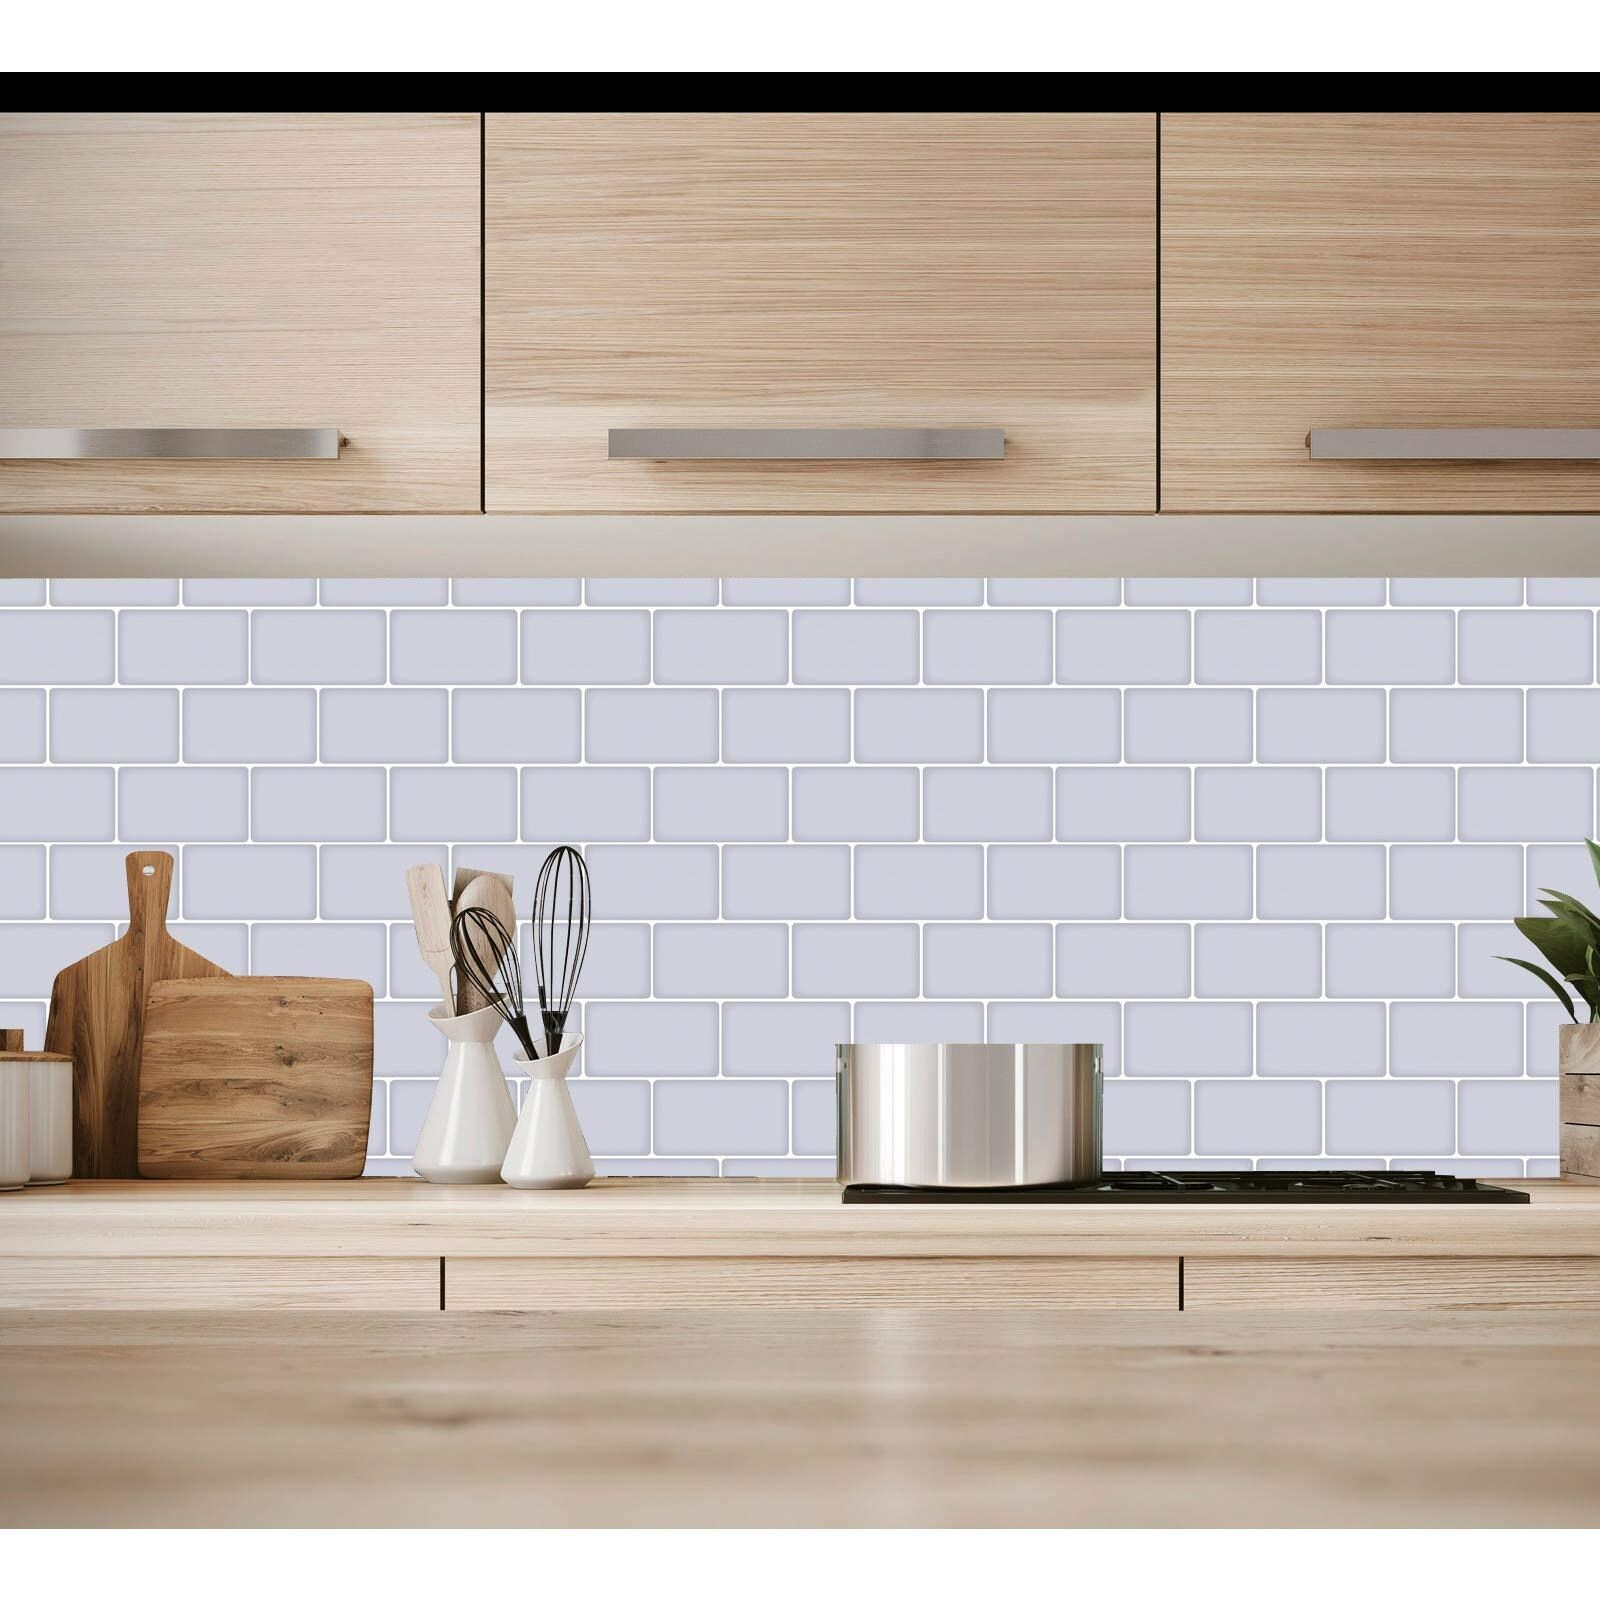 Art3d Subway Tiles Peel and Stick Backsplash, Stick on Tiles Kitchen  Backsplash (10 Tiles, Thicker Version) - On Sale - Bed Bath & Beyond -  33703040